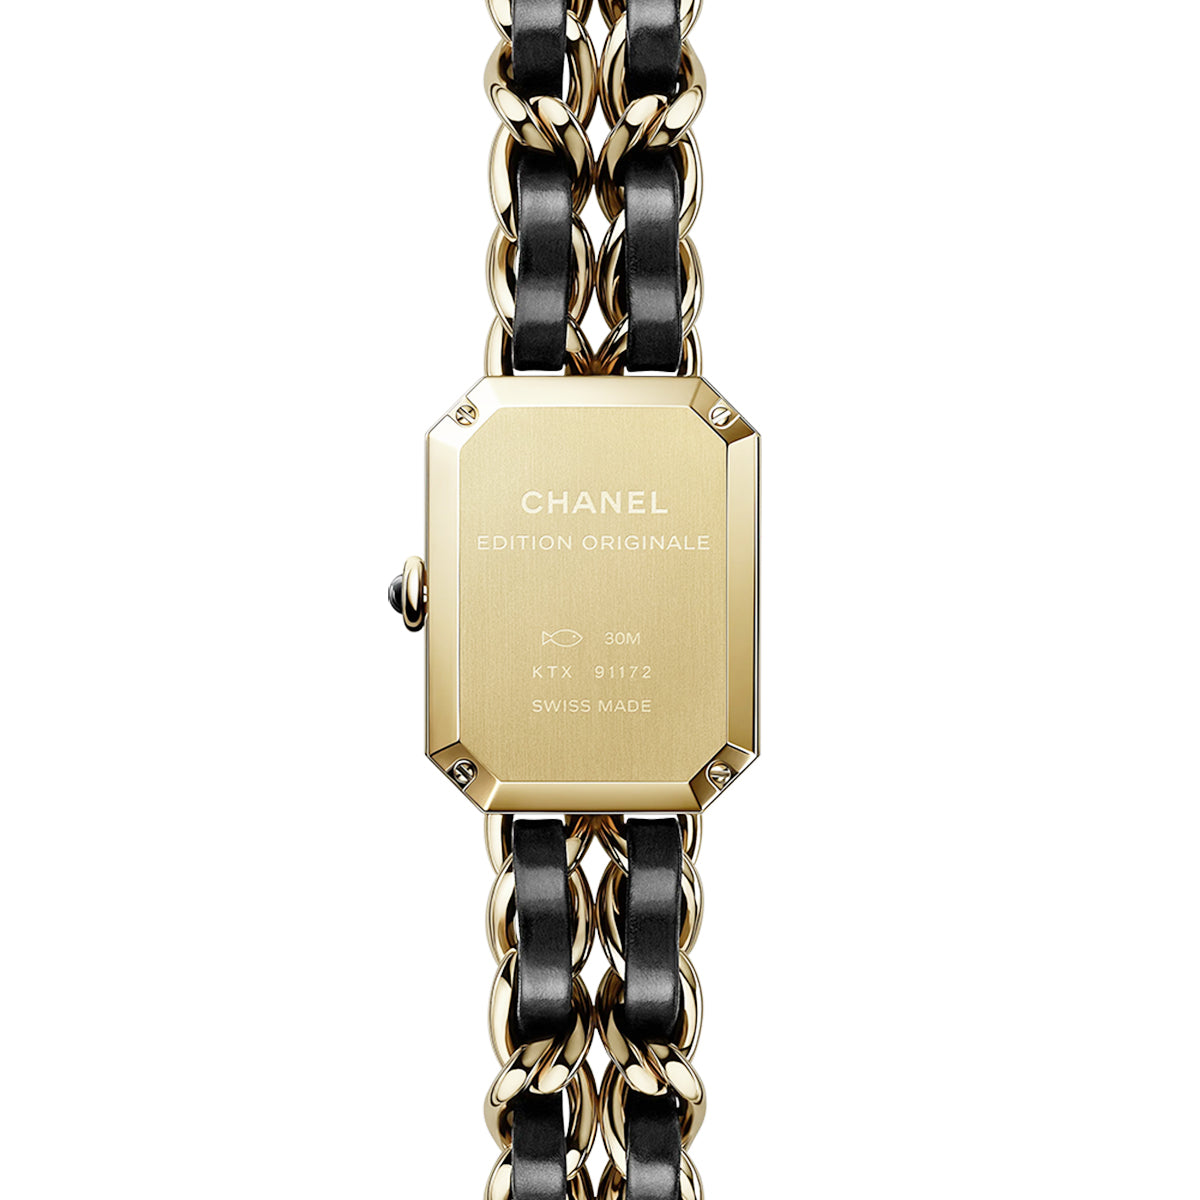 PREMIERE Edition Originale Small 18ct Yellow Gold Chain Bracelet Watch